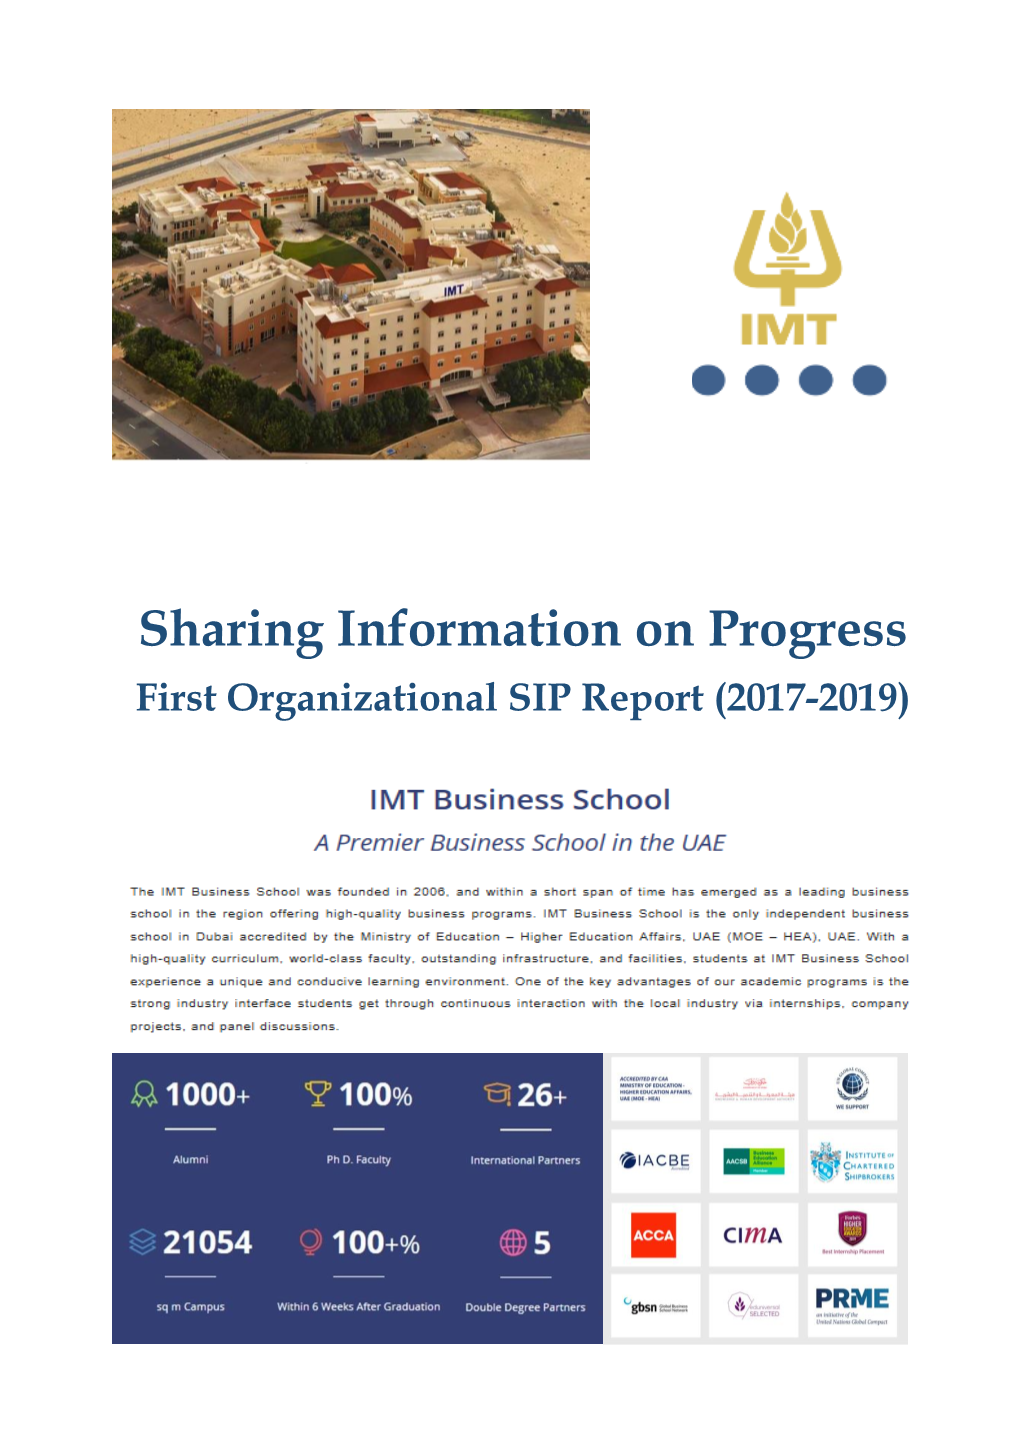 Sharing Information on Progress First Organizational SIP Report (2017-2019)